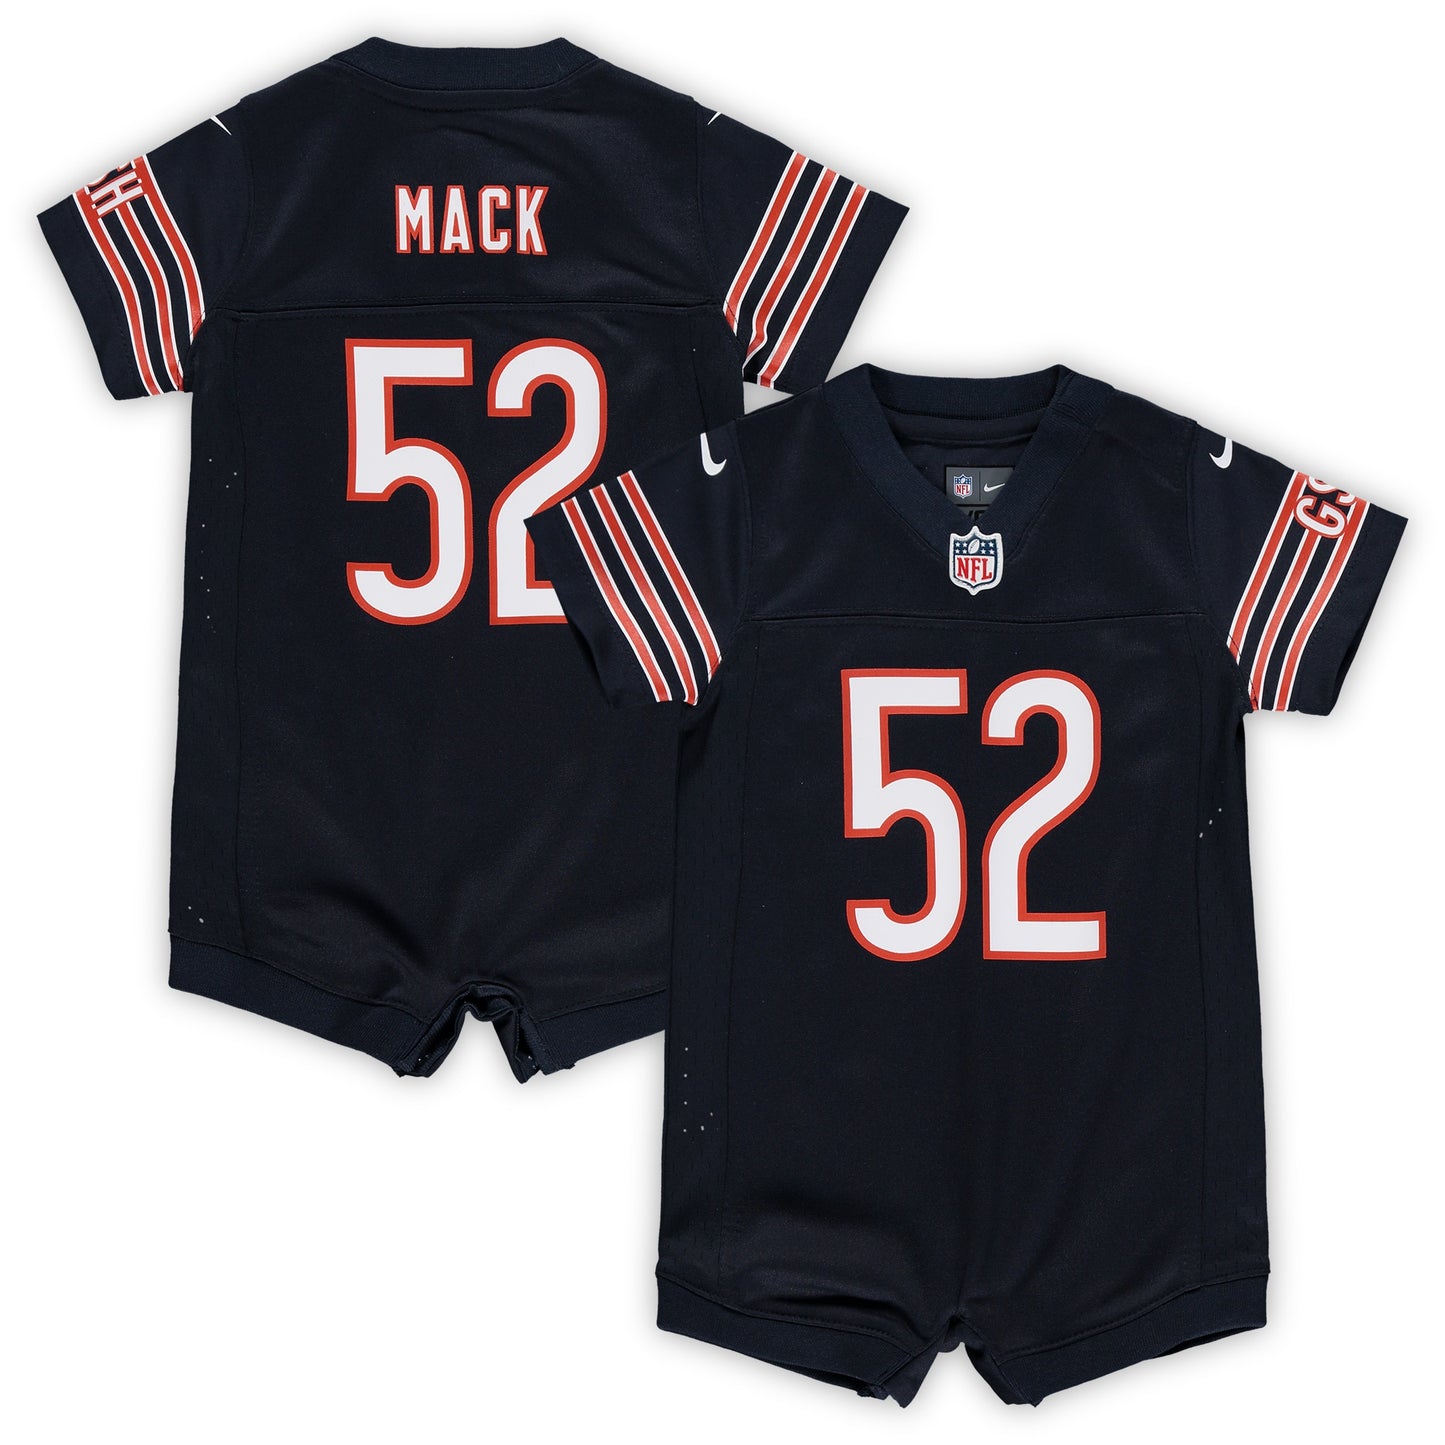 Khalil Mack Chicago Bears Nike Infant Romper Jersey - Navy